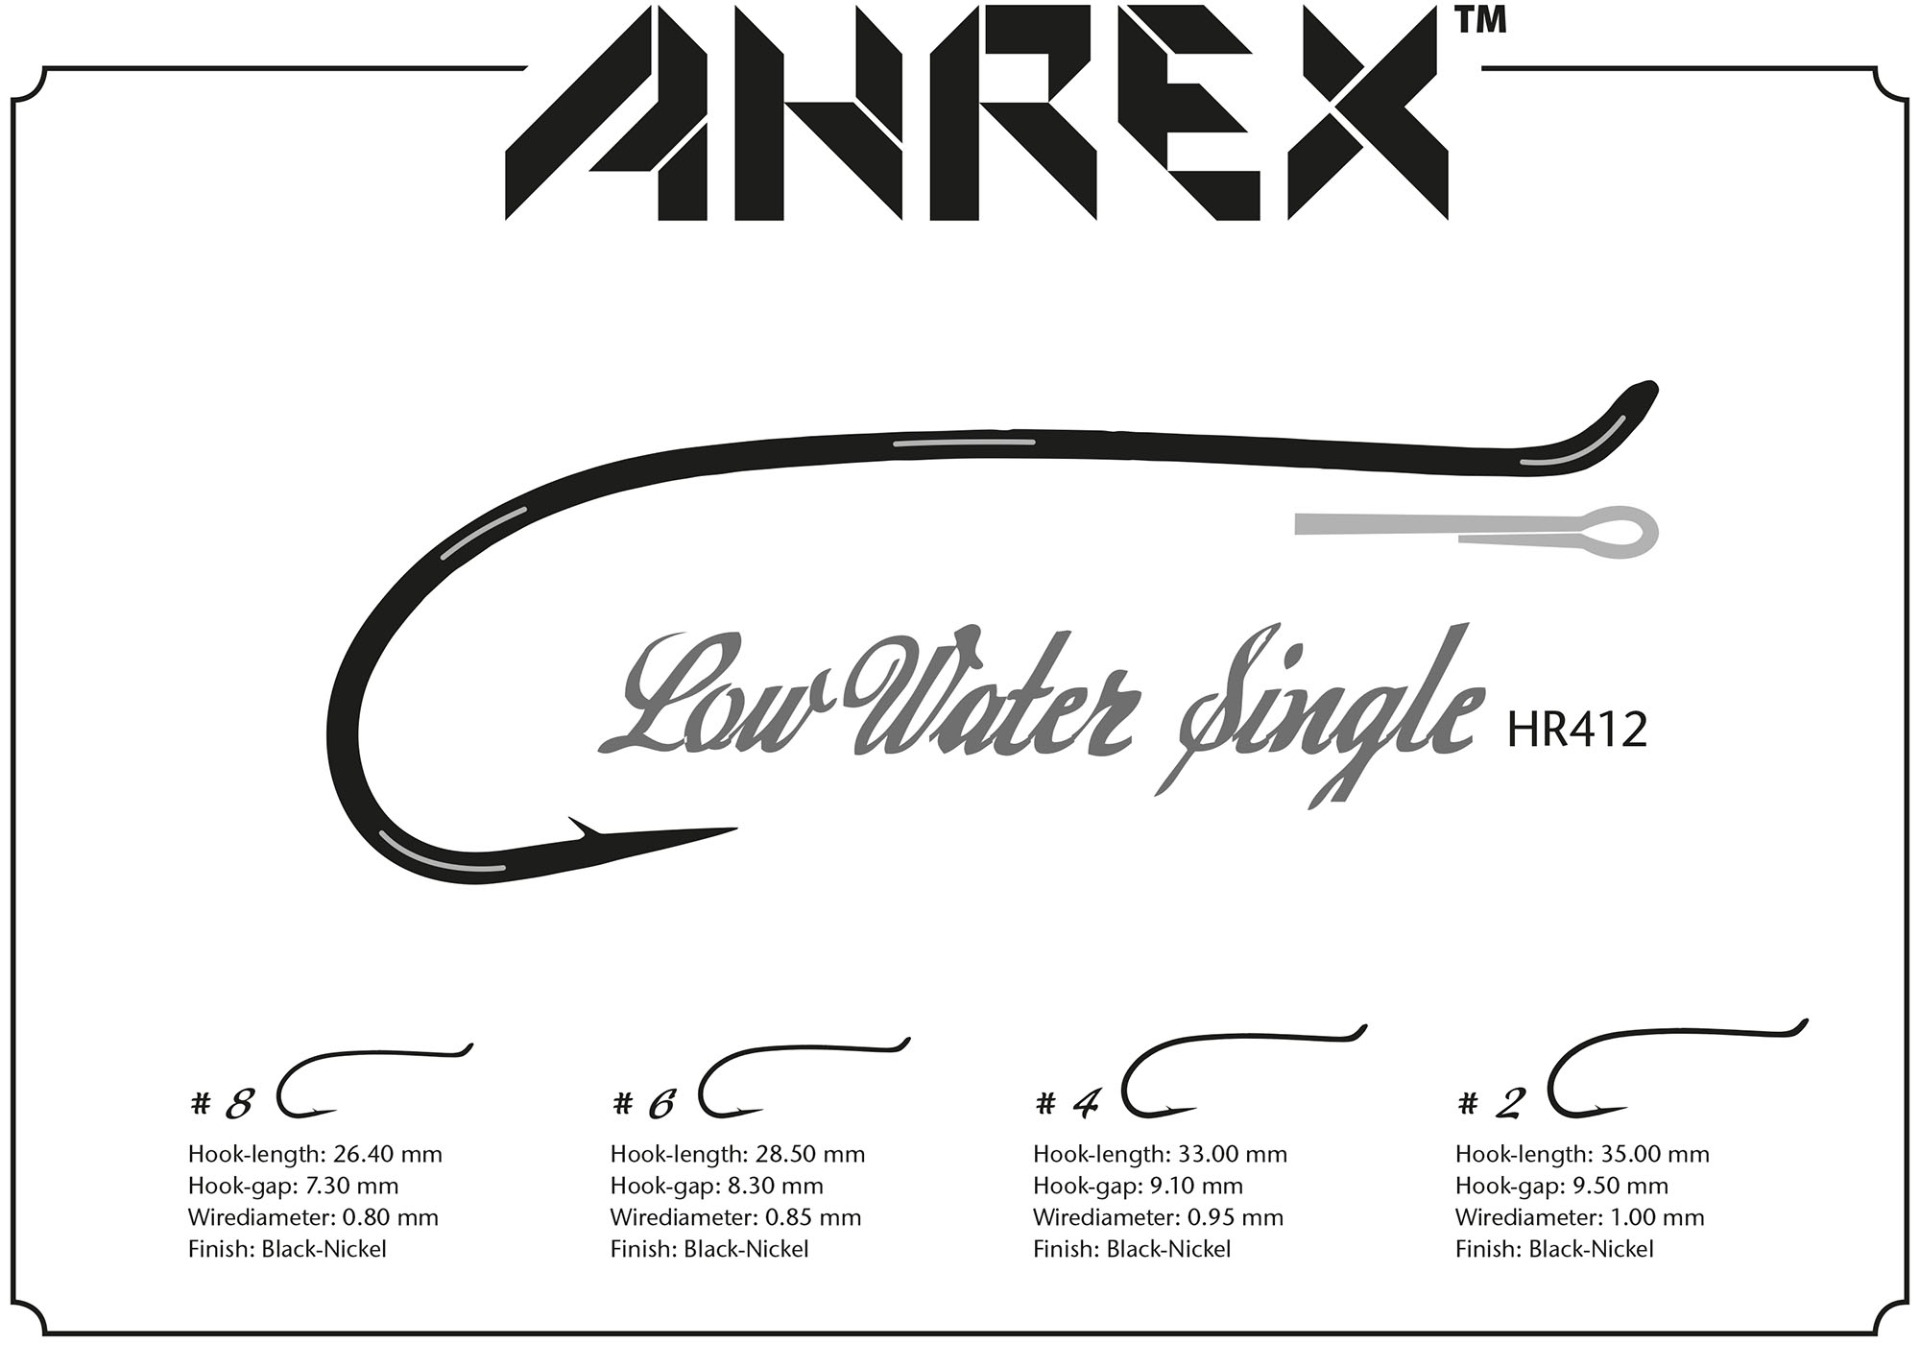 Ahrex Salmon Low Water Single #2-#8